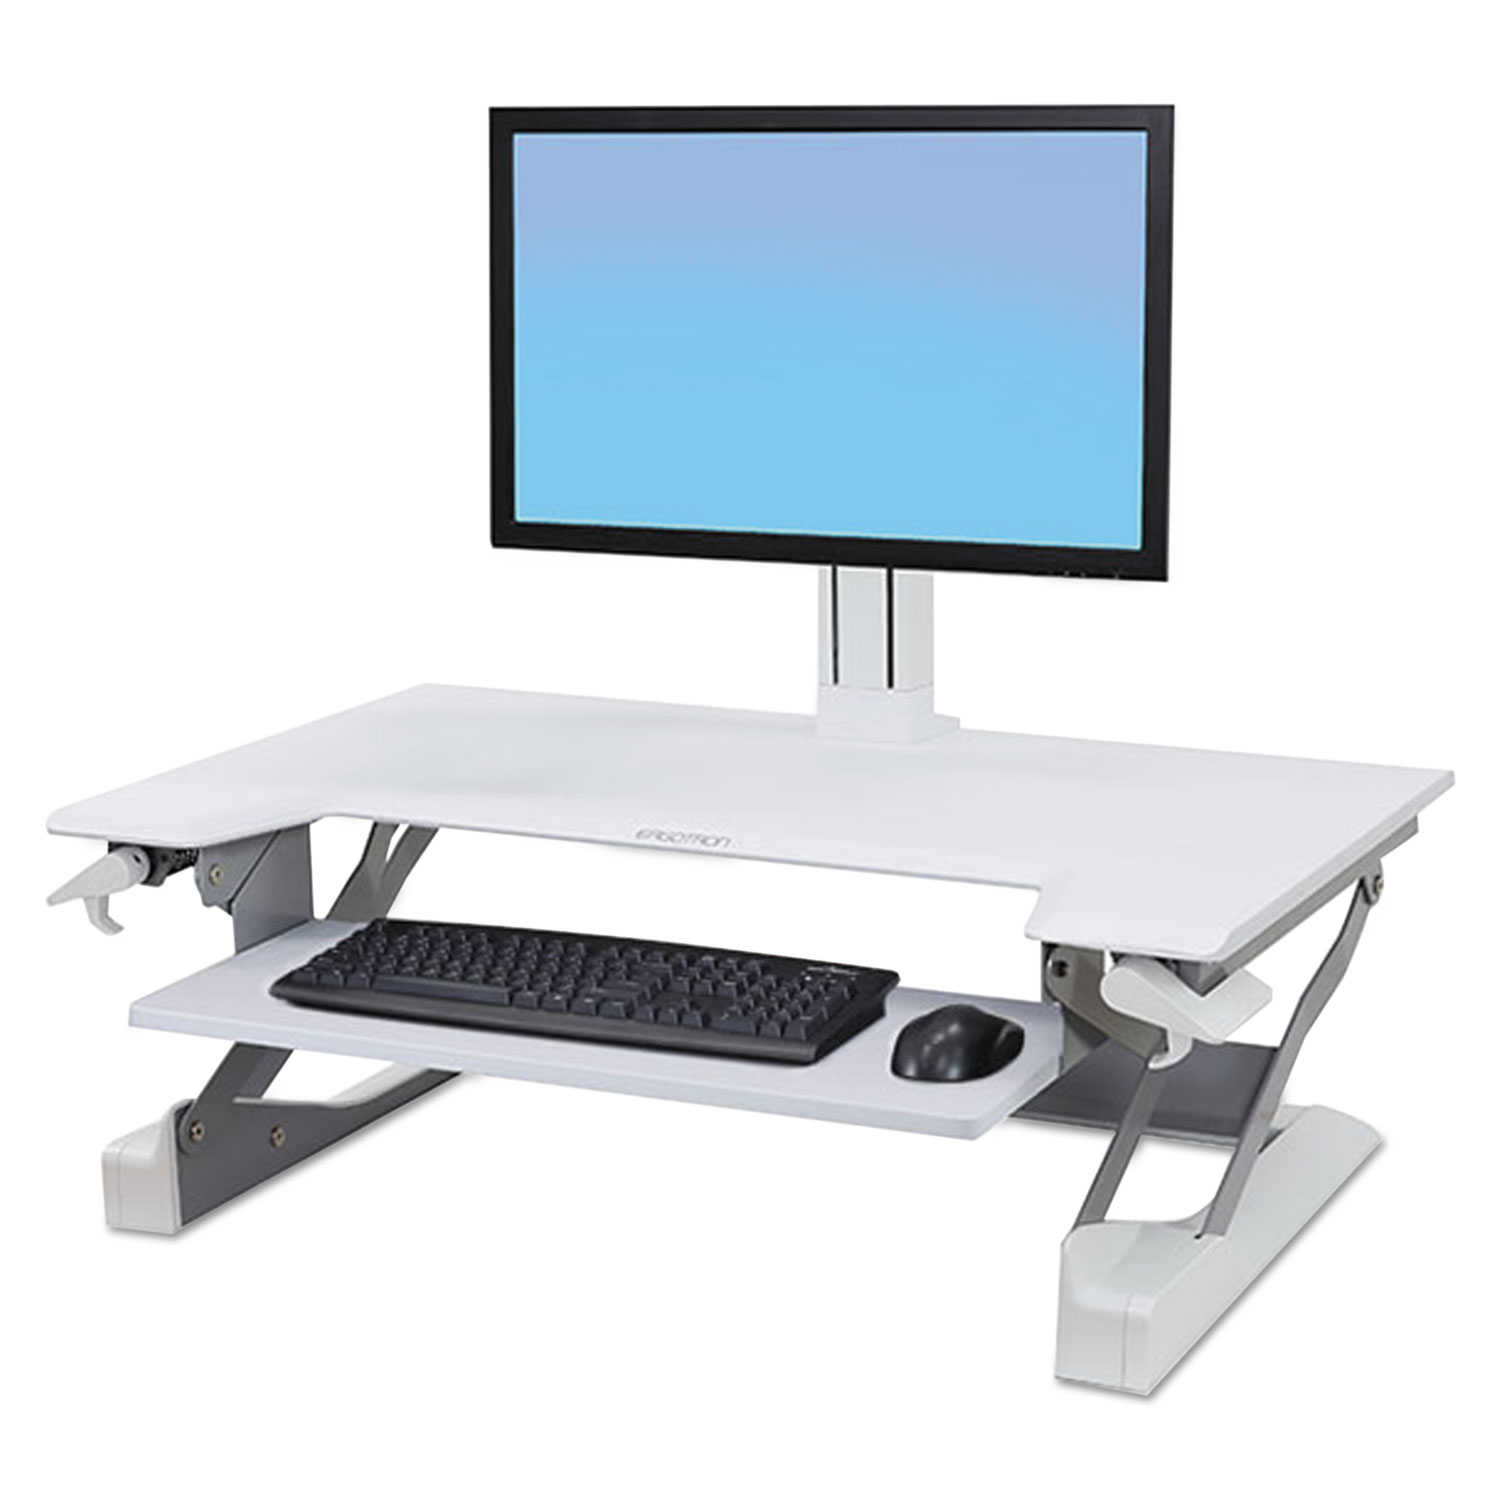 WorkFit-TL Desktop Sit-Stand Workstation, 37 1/2 x 25 x 20, White